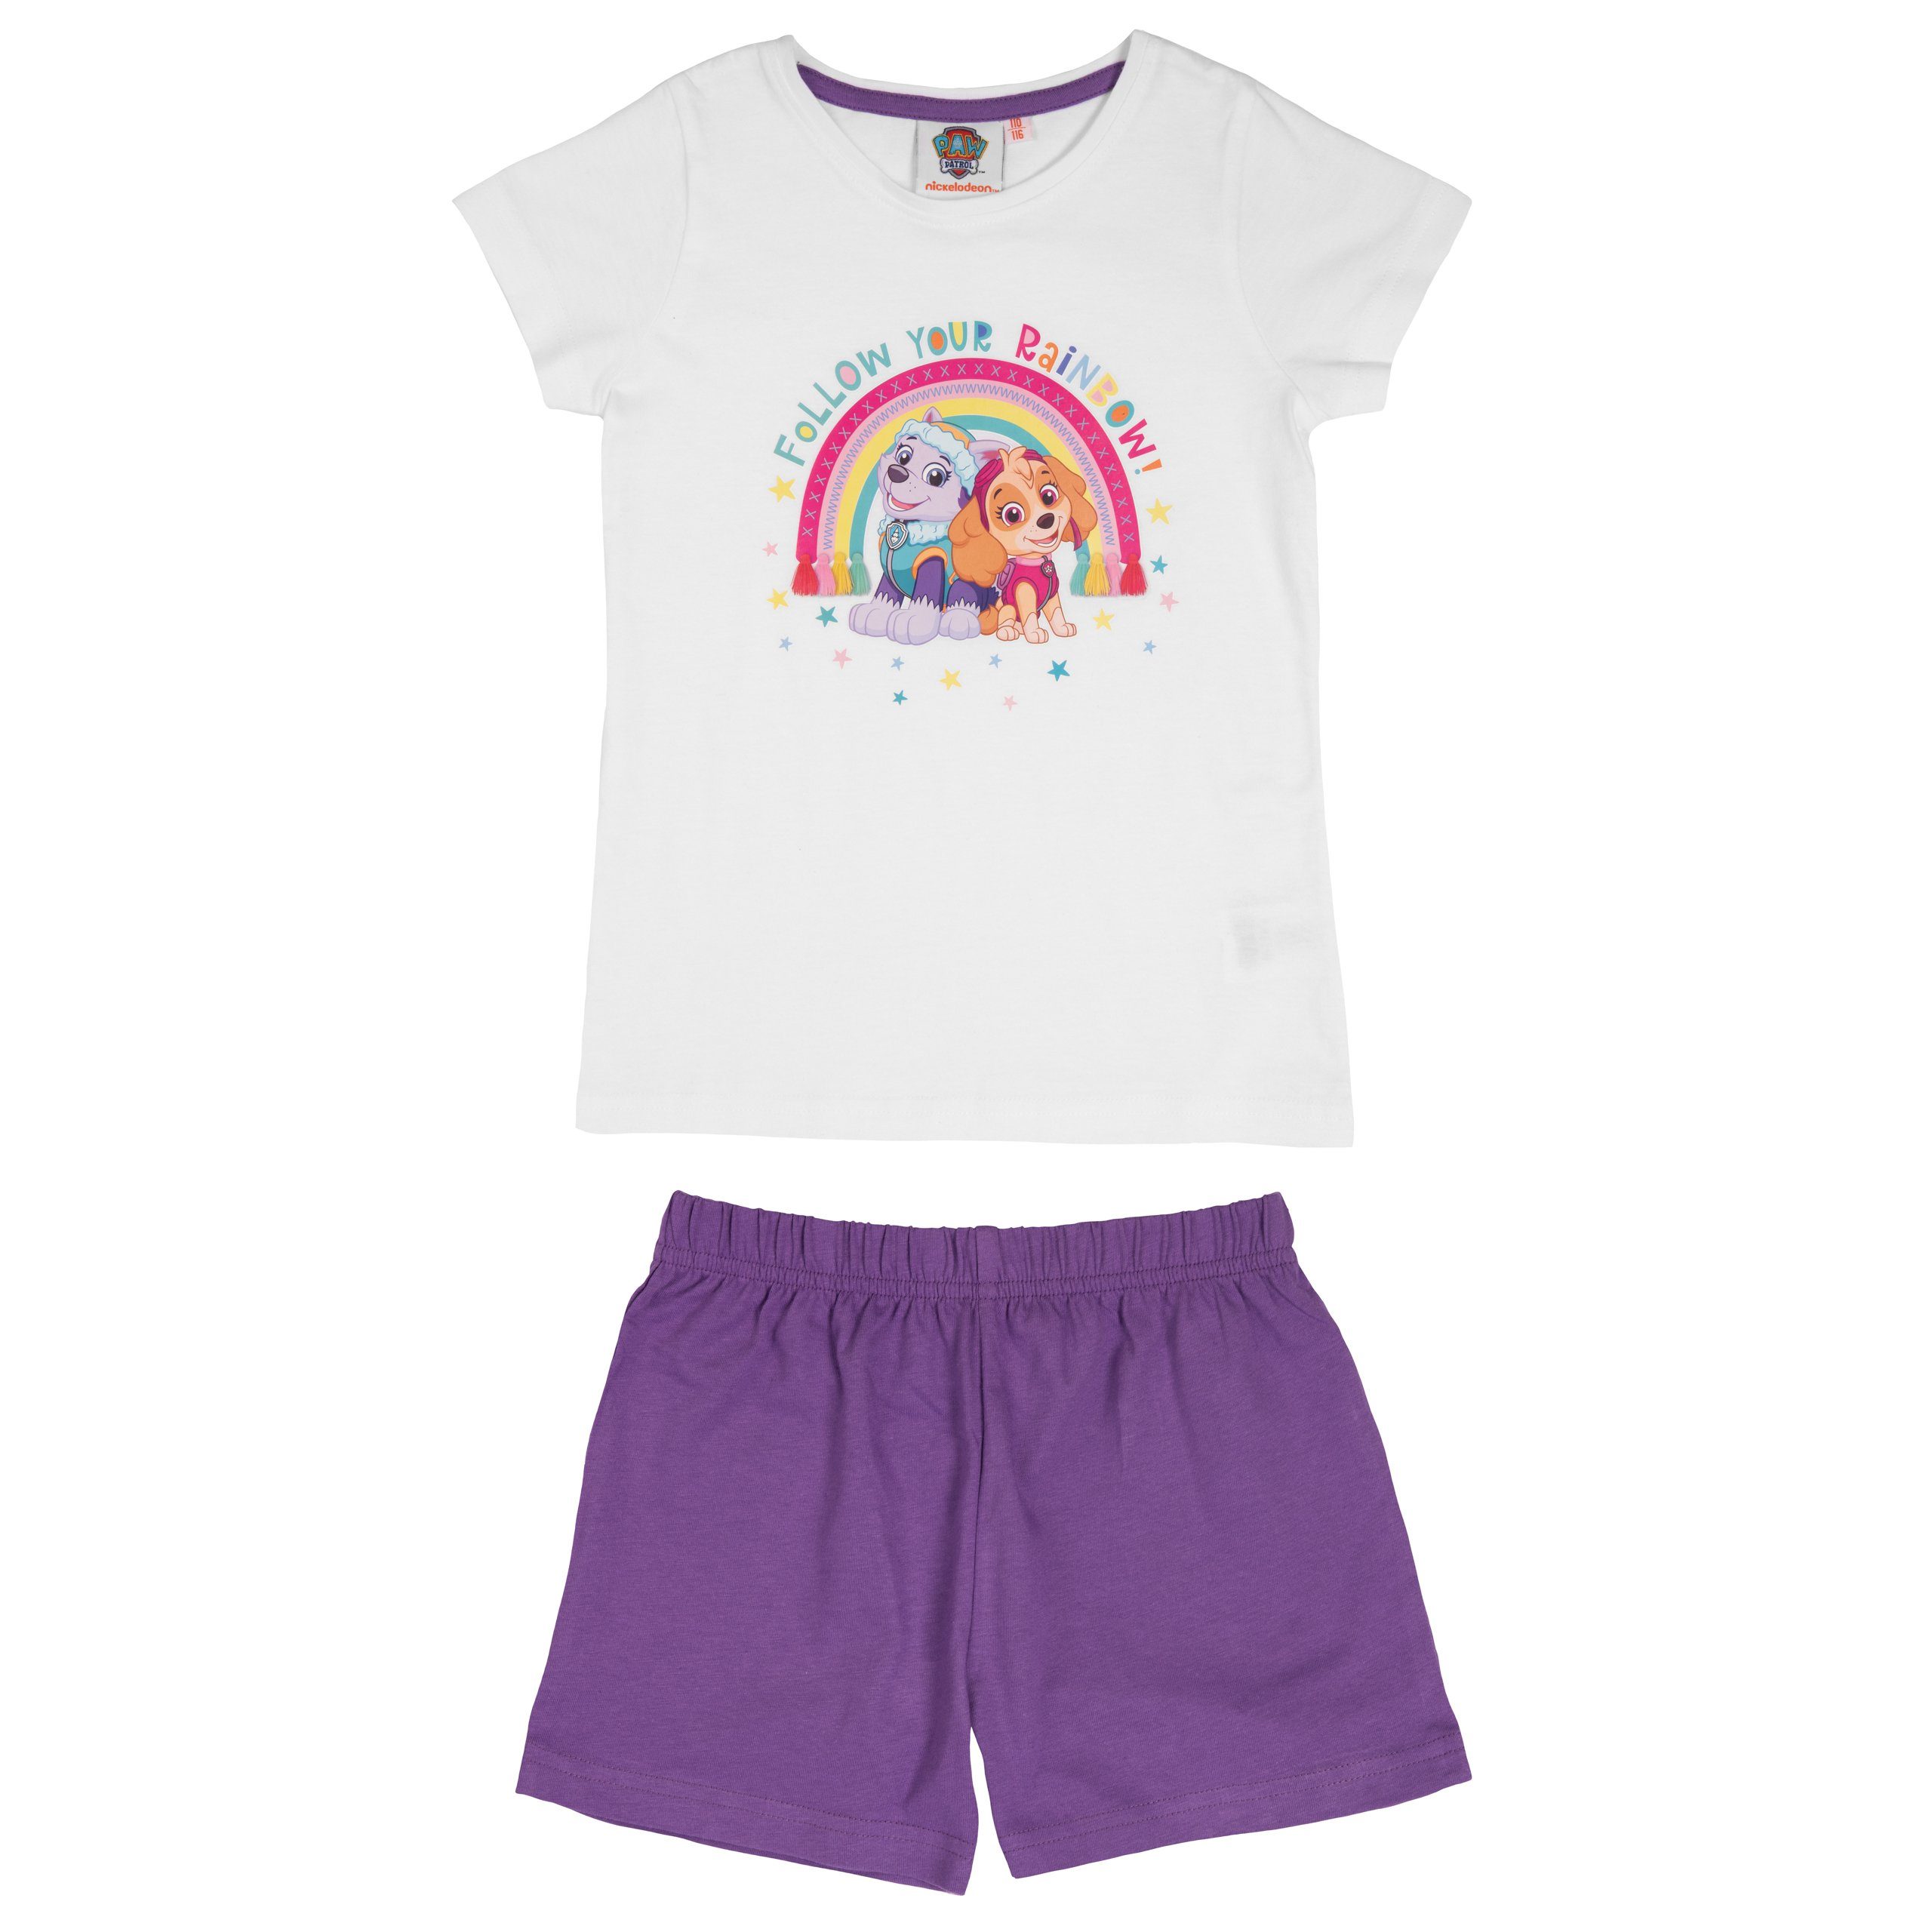 Mädchen United Schlafanzug für your Labels® Weiß/Lila Follow - Patrol Paw Rainbow! Schlafanzug